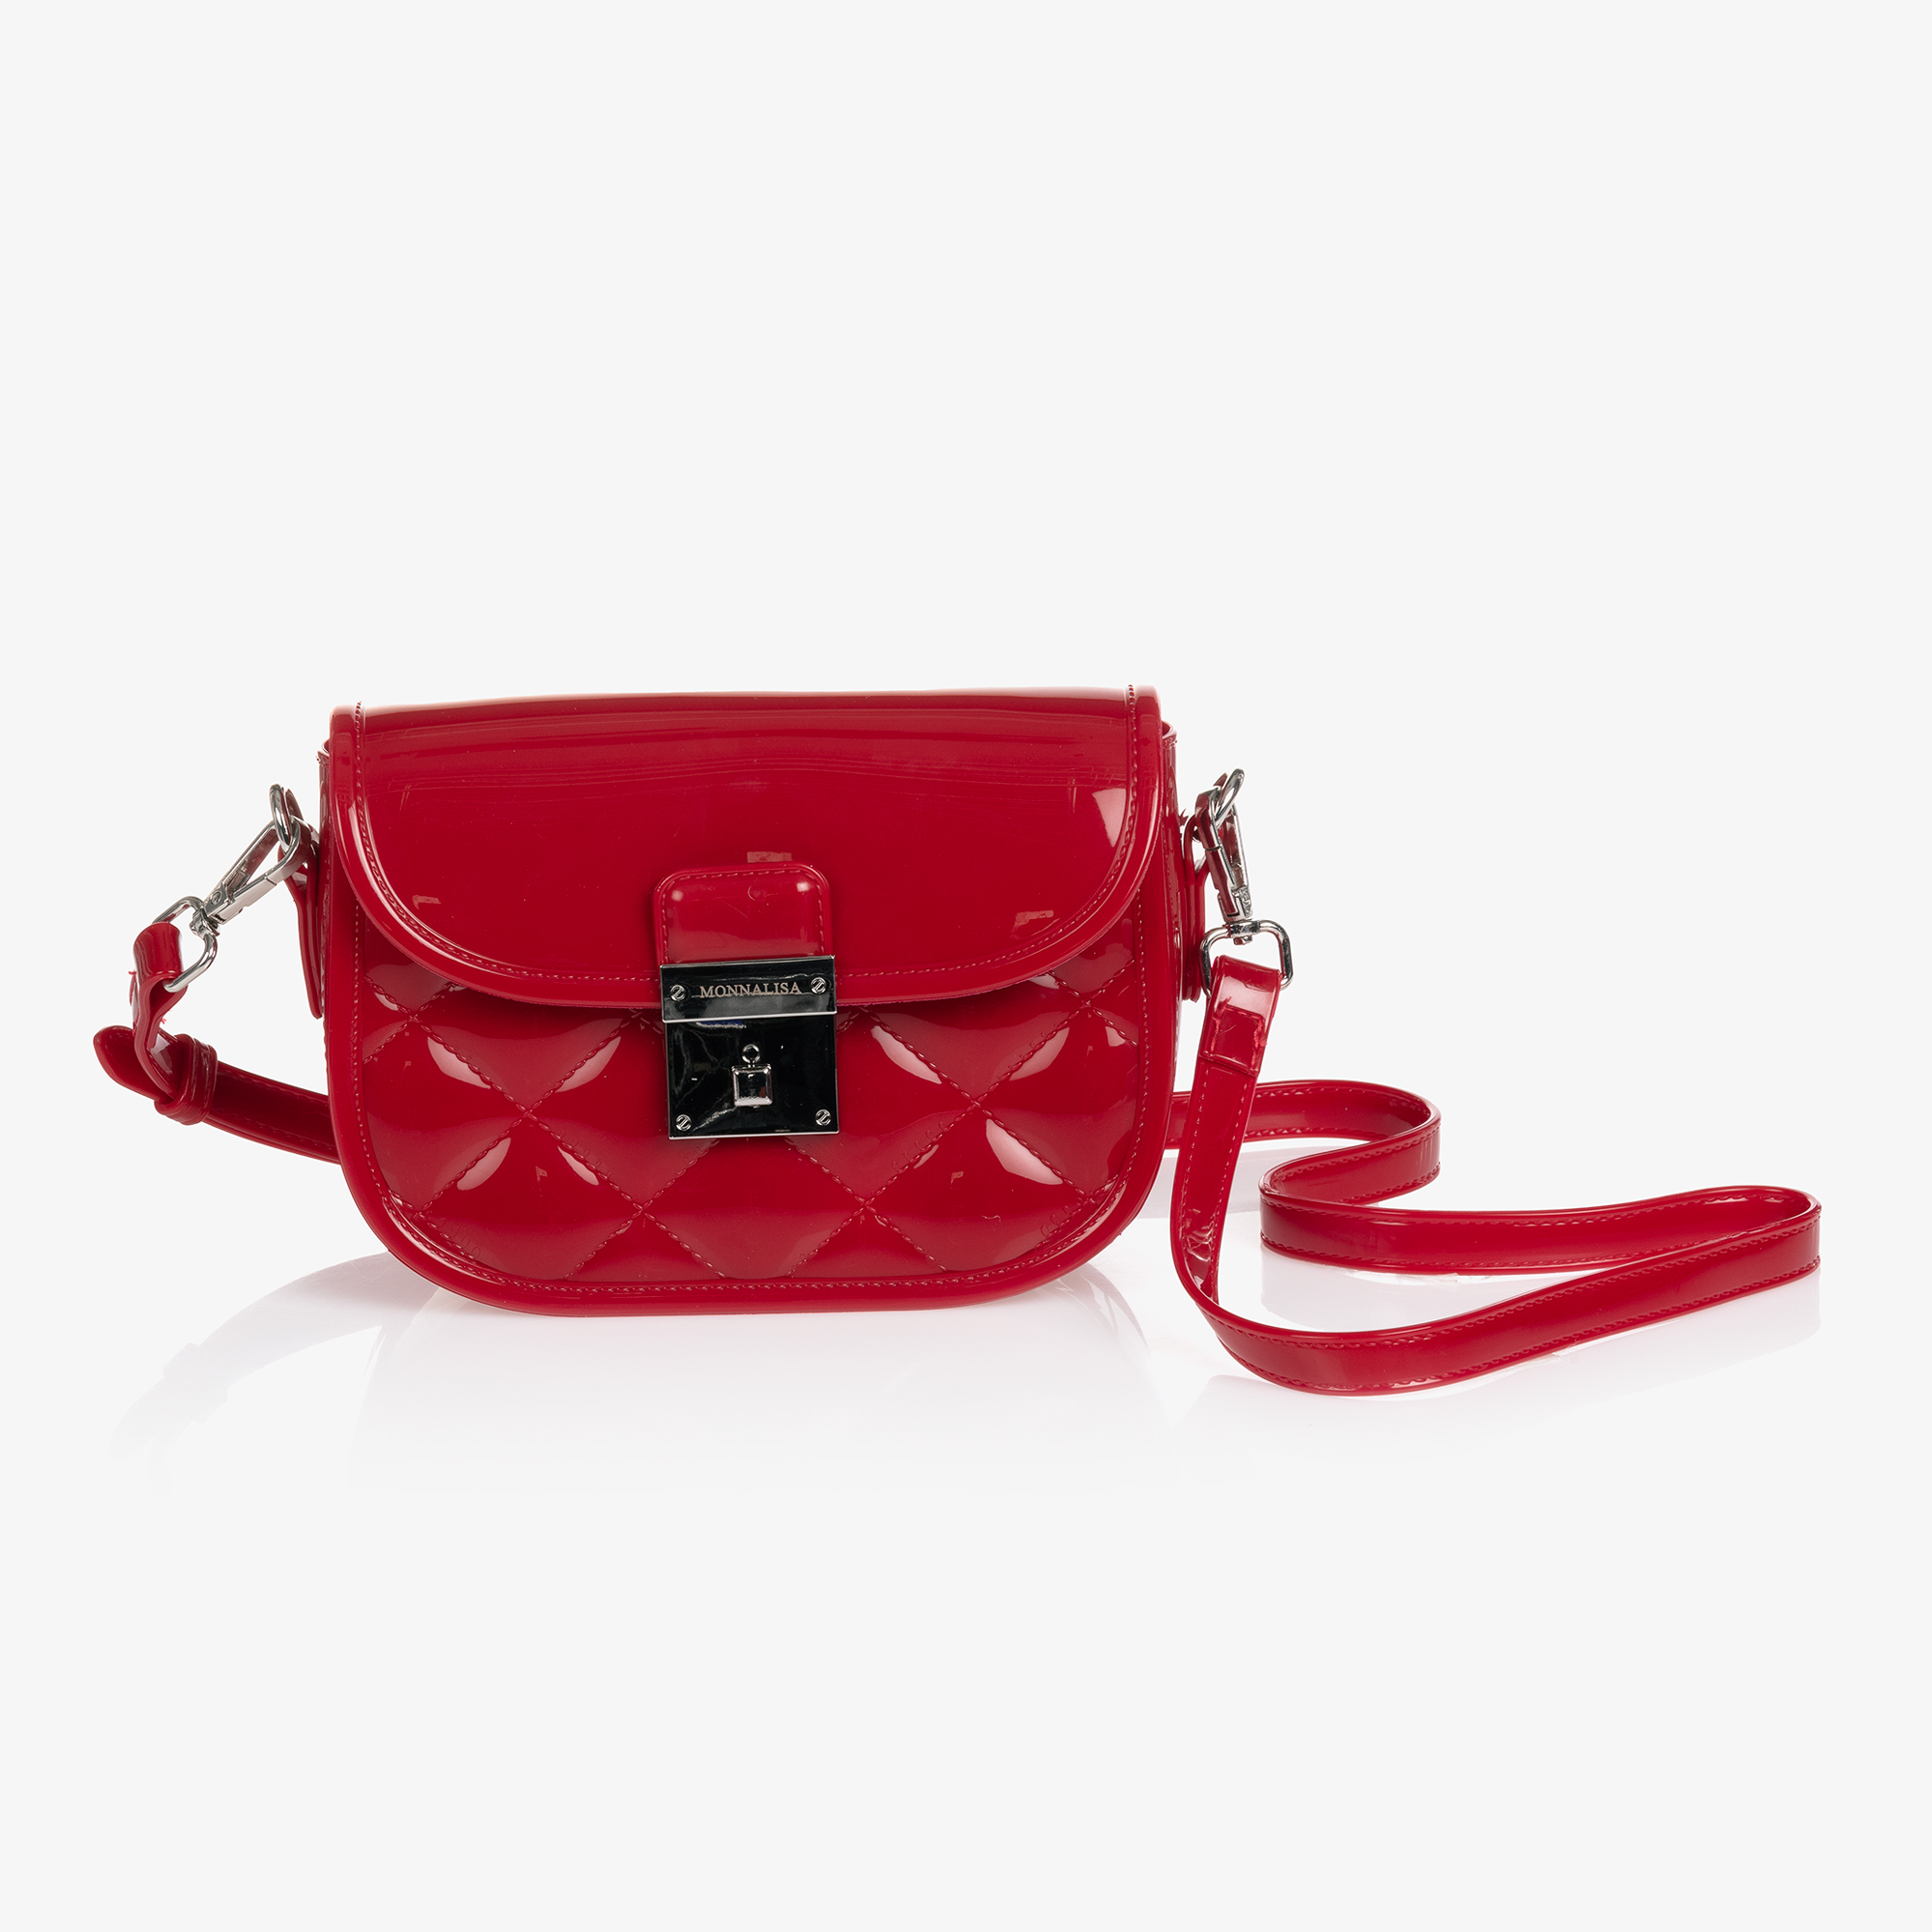 Women's Jelly Bag Shoulder Bag Crossbody Purse with Flap Over Twist Lock  Closure | eBay